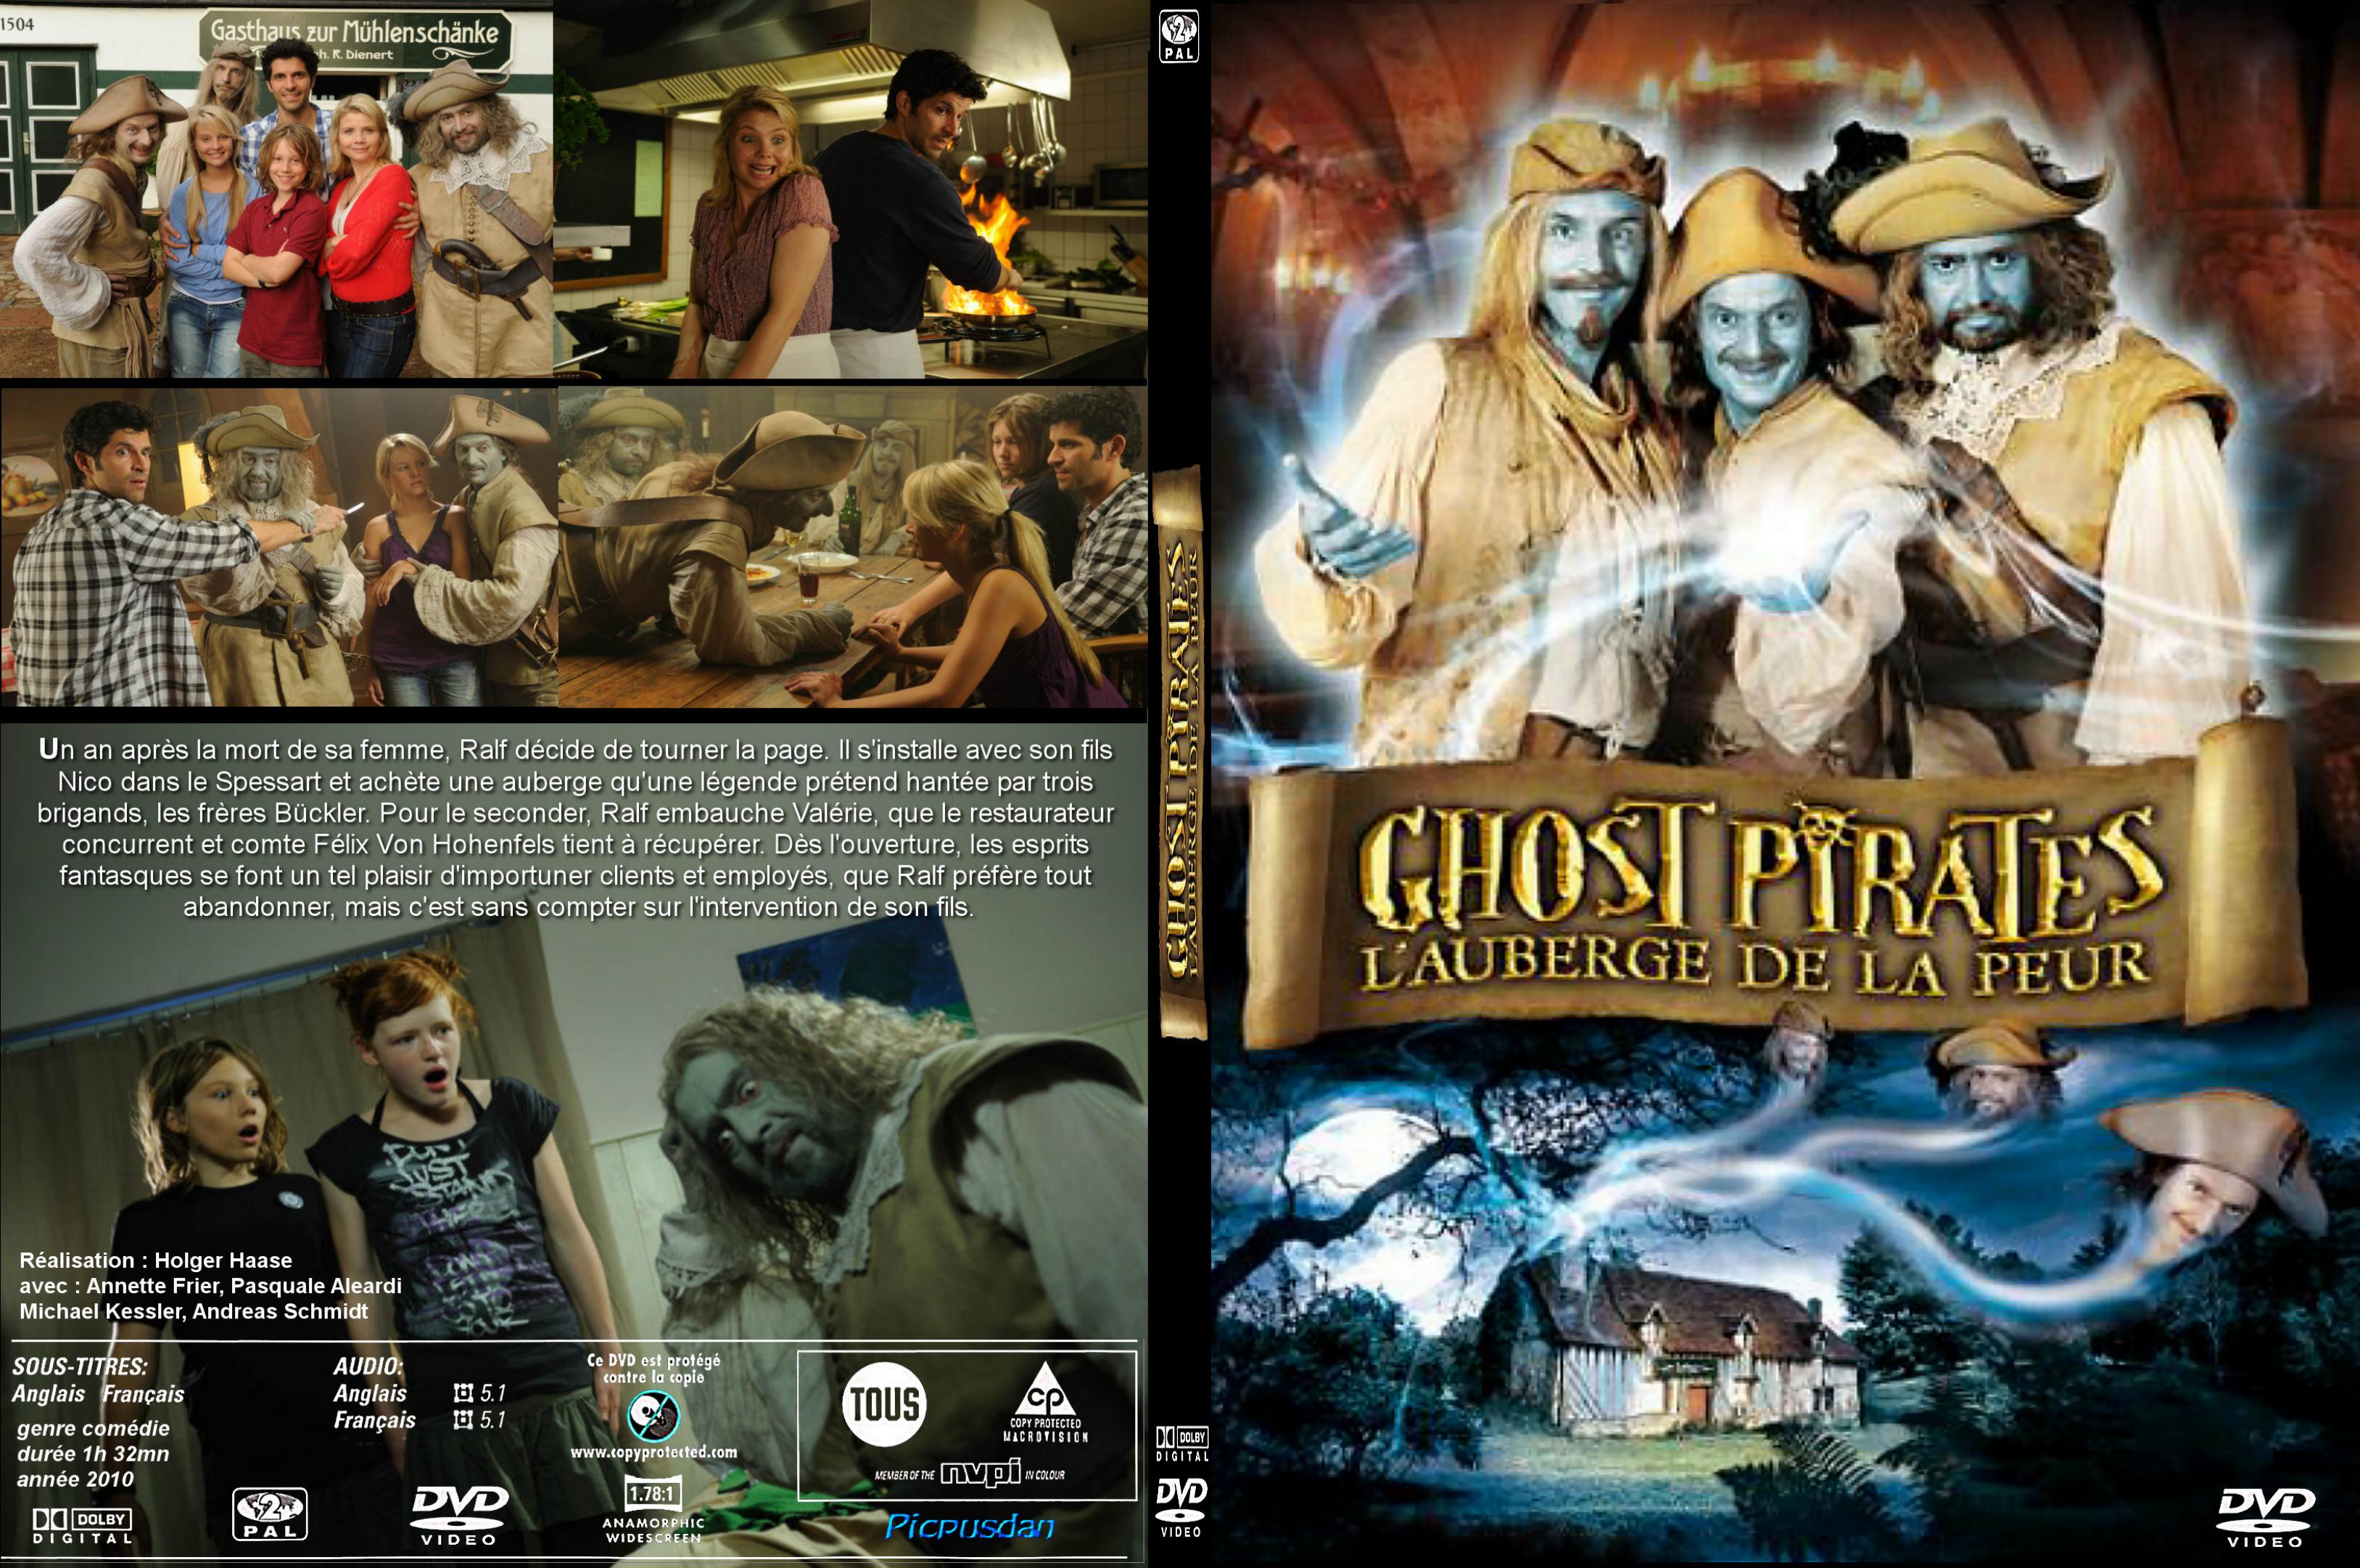 Jaquette DVD Ghost pirates l